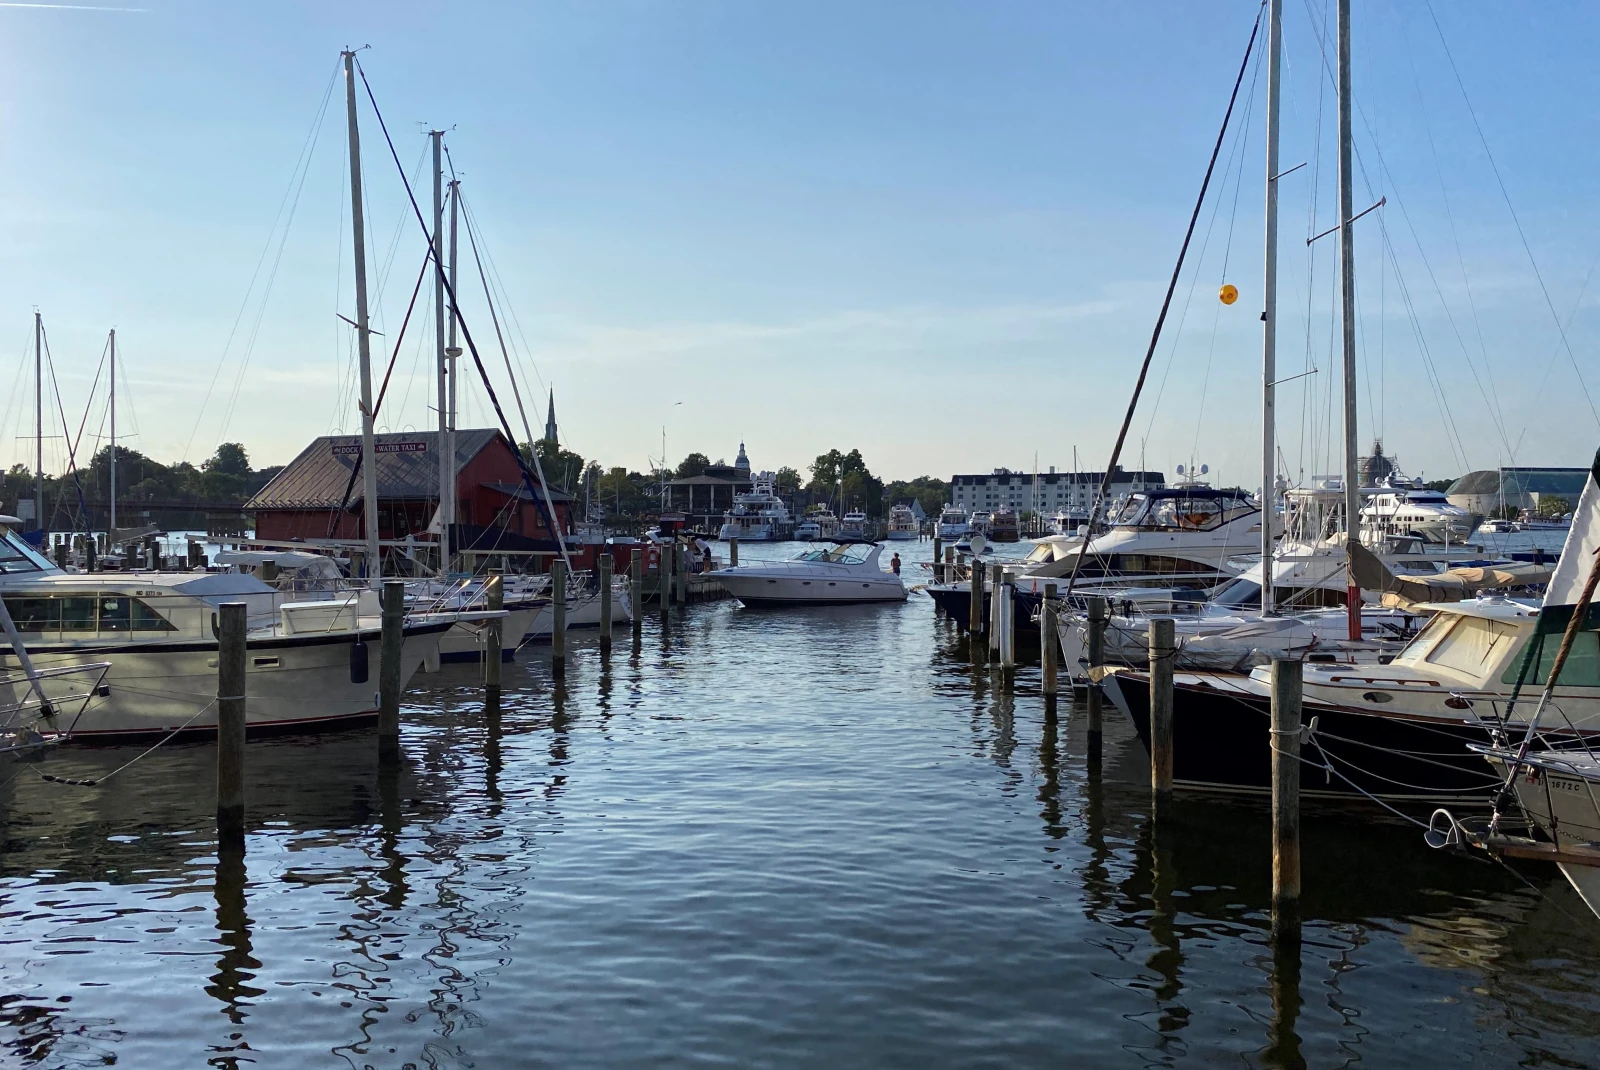 Boats at the marina in Annapolis, Maryland